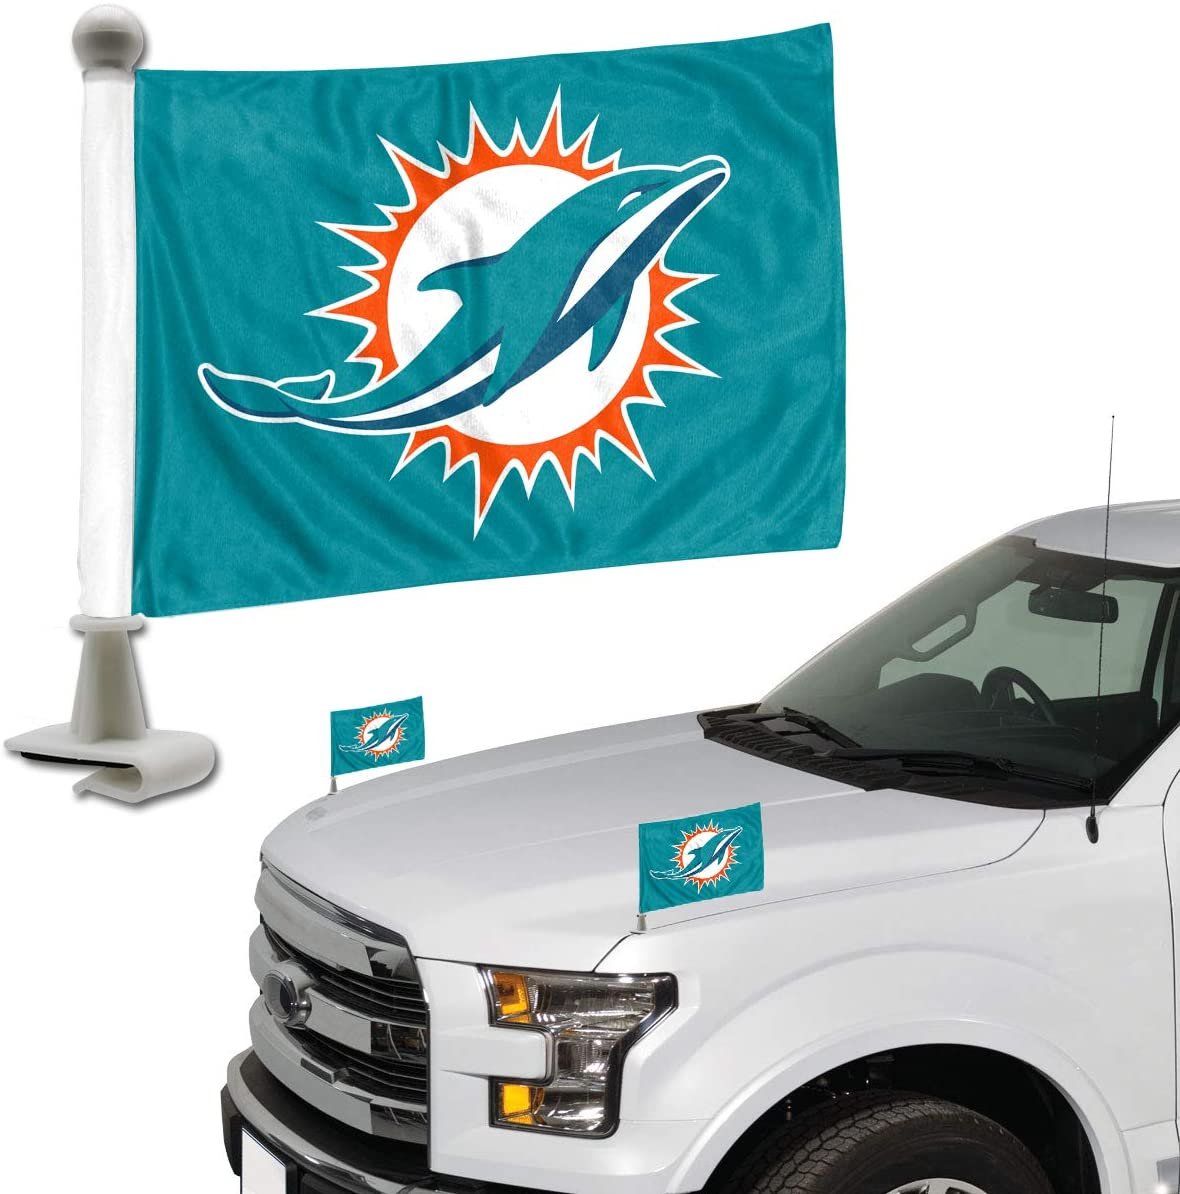 FANMATS ProMark NFL Miami Dolphins Flag Set 2-Piece Ambassador Style, Team Color, One Size